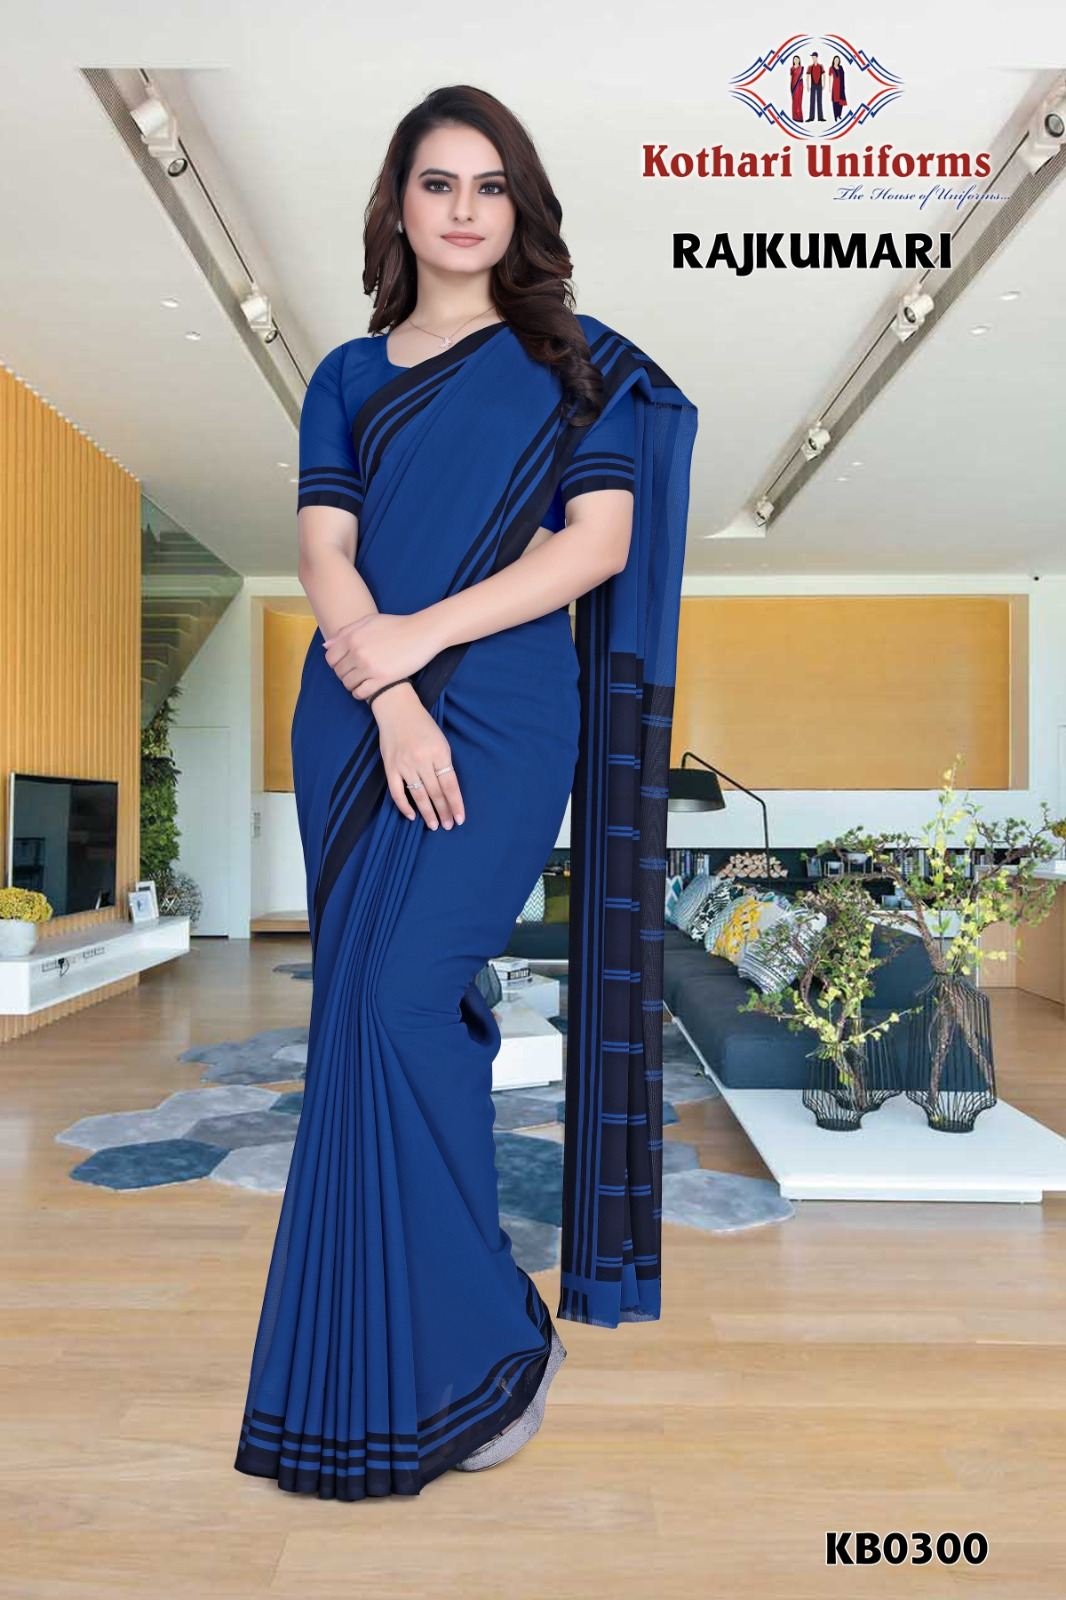 Rajkumari - KB0300 Royal Blue  Premium Georgette Plain Border Uniform sarees For womens